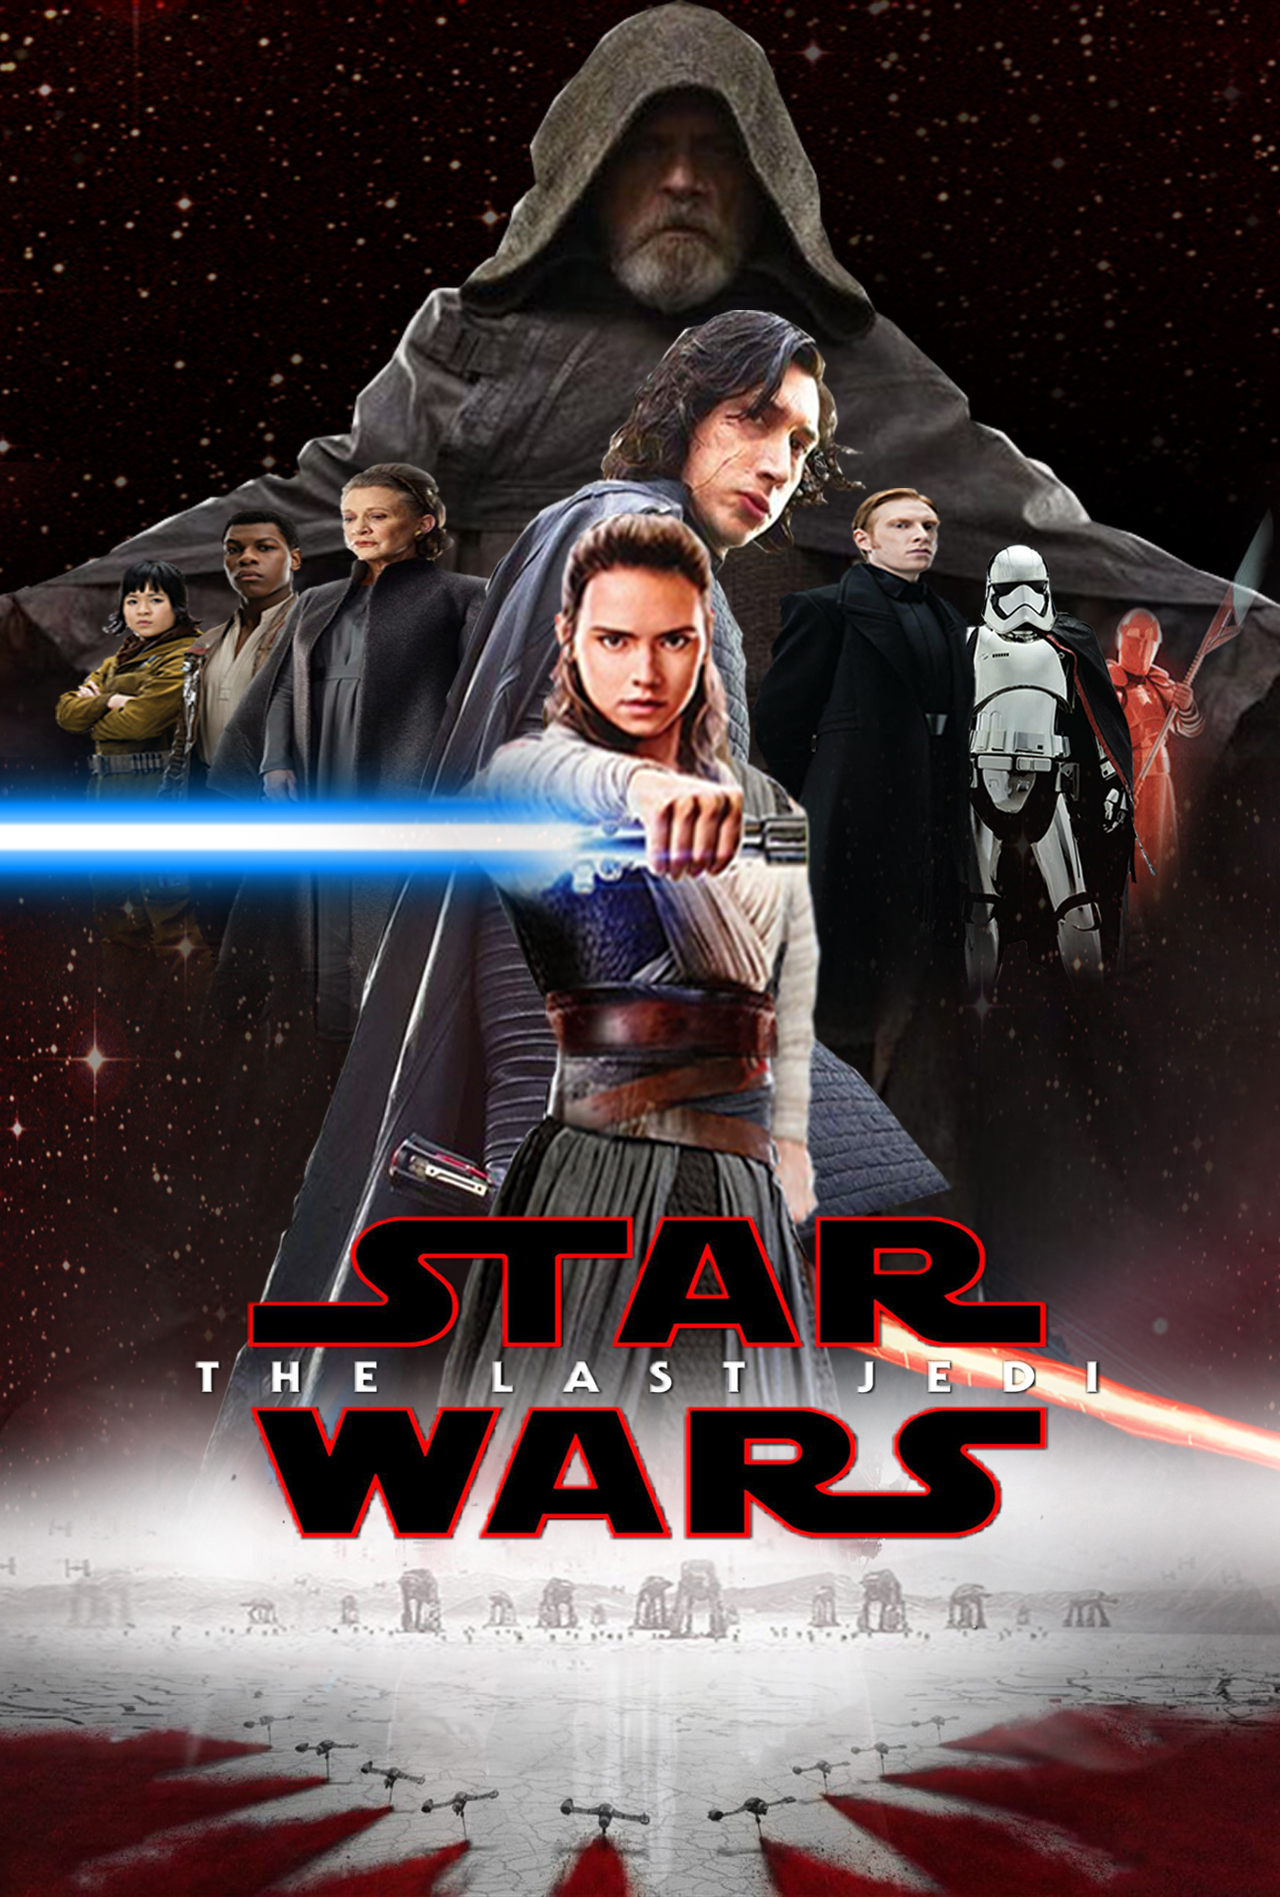 Star Wars: The Last Jedi poster concept by Thekingblader995 on DeviantArt